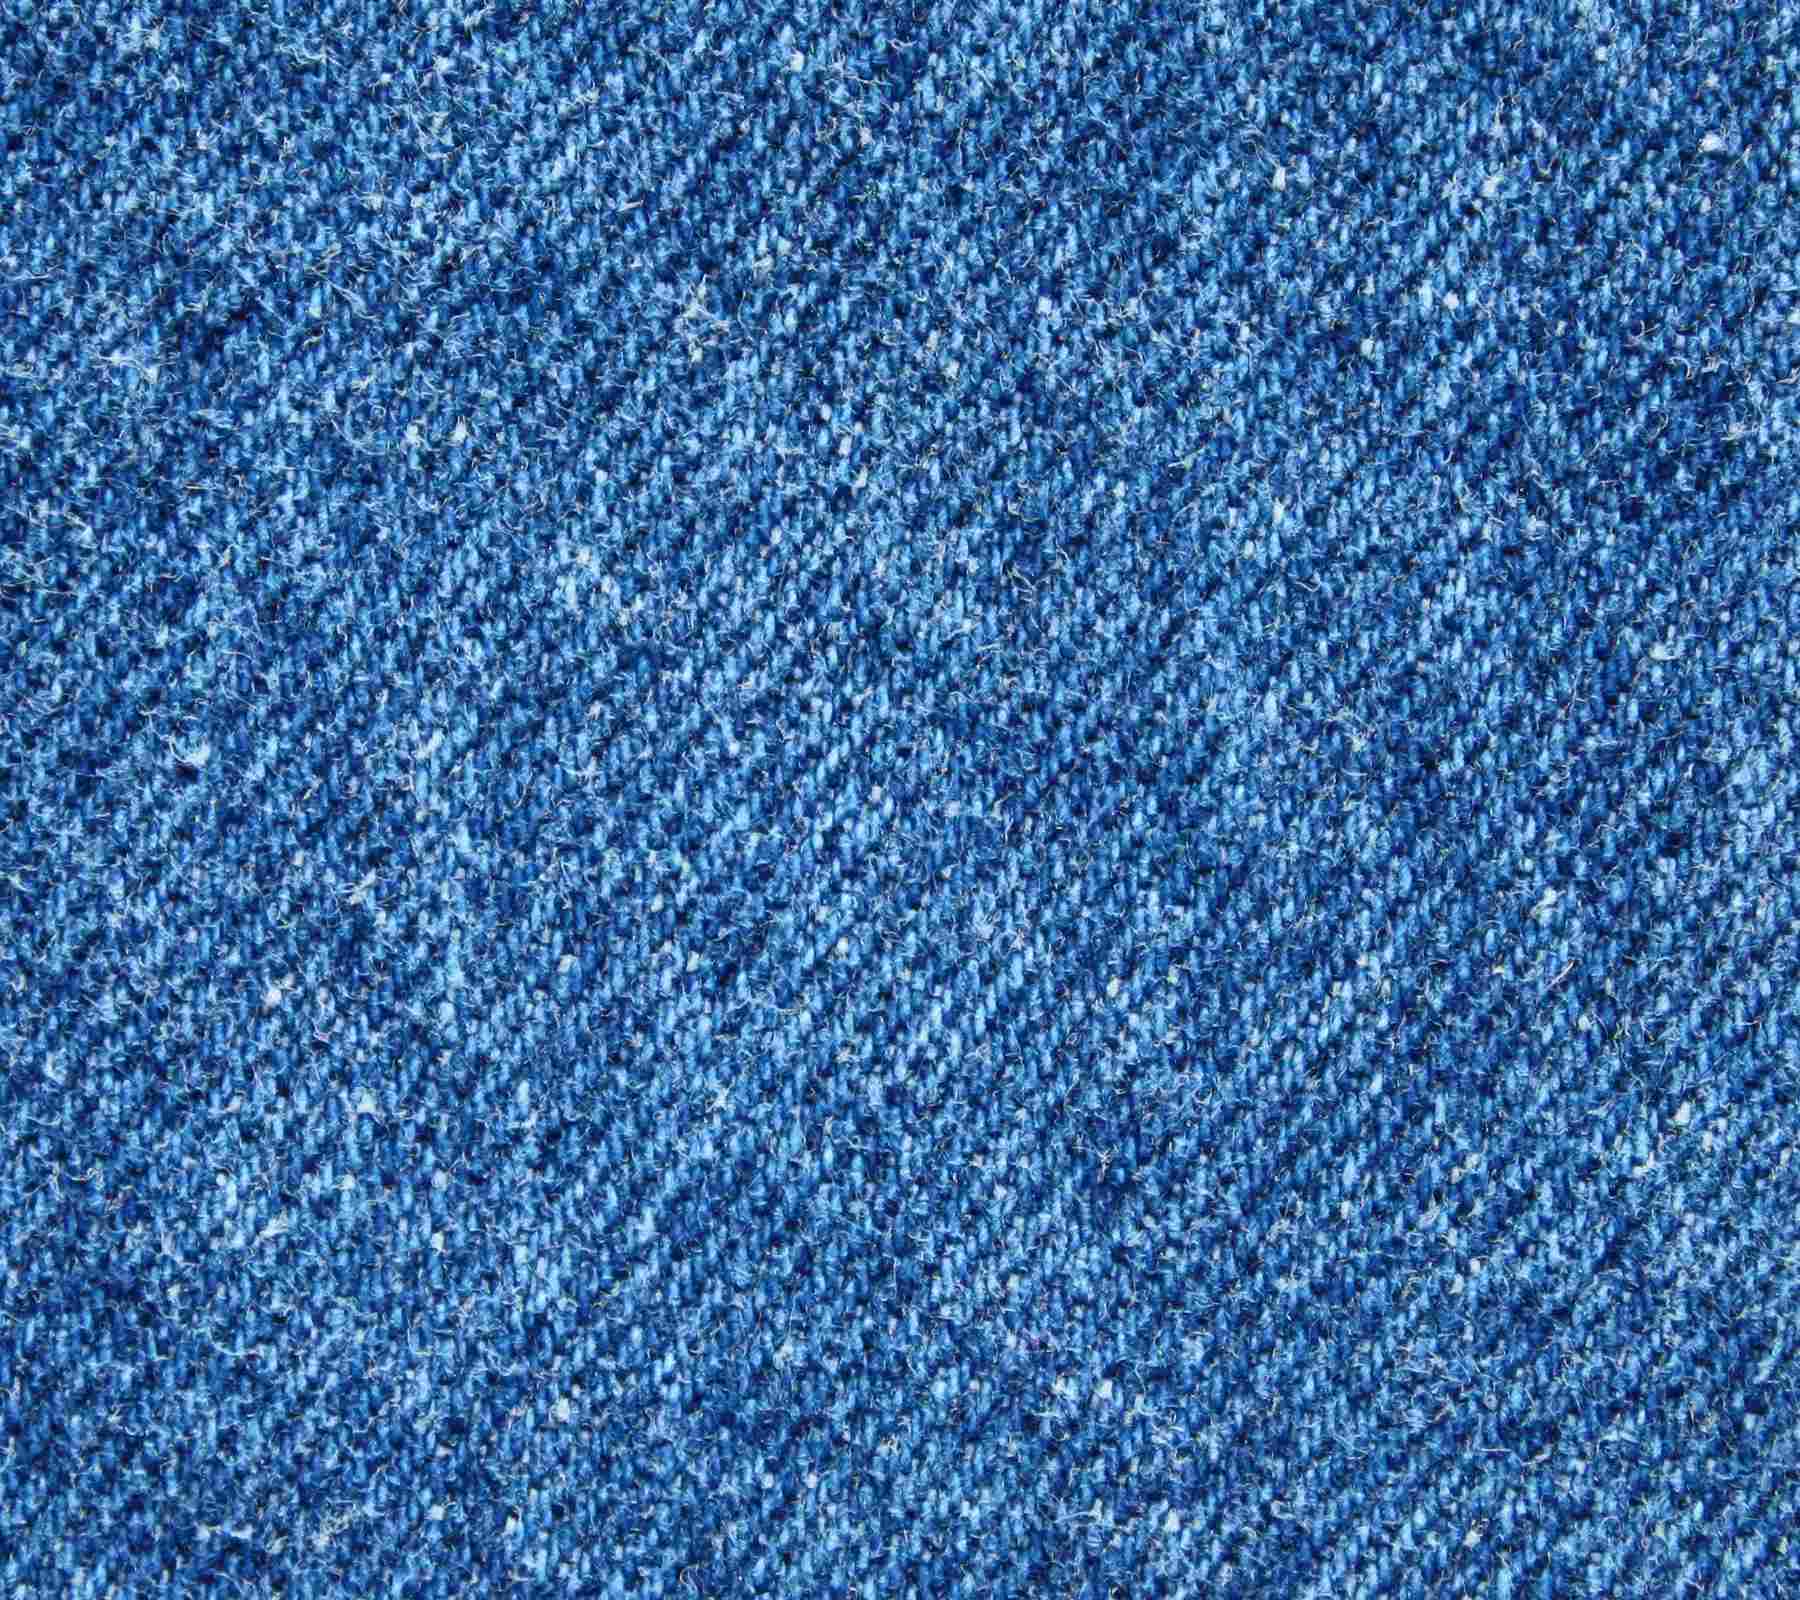 Denim Blue Jeans Fabric Background Background Wallpaper